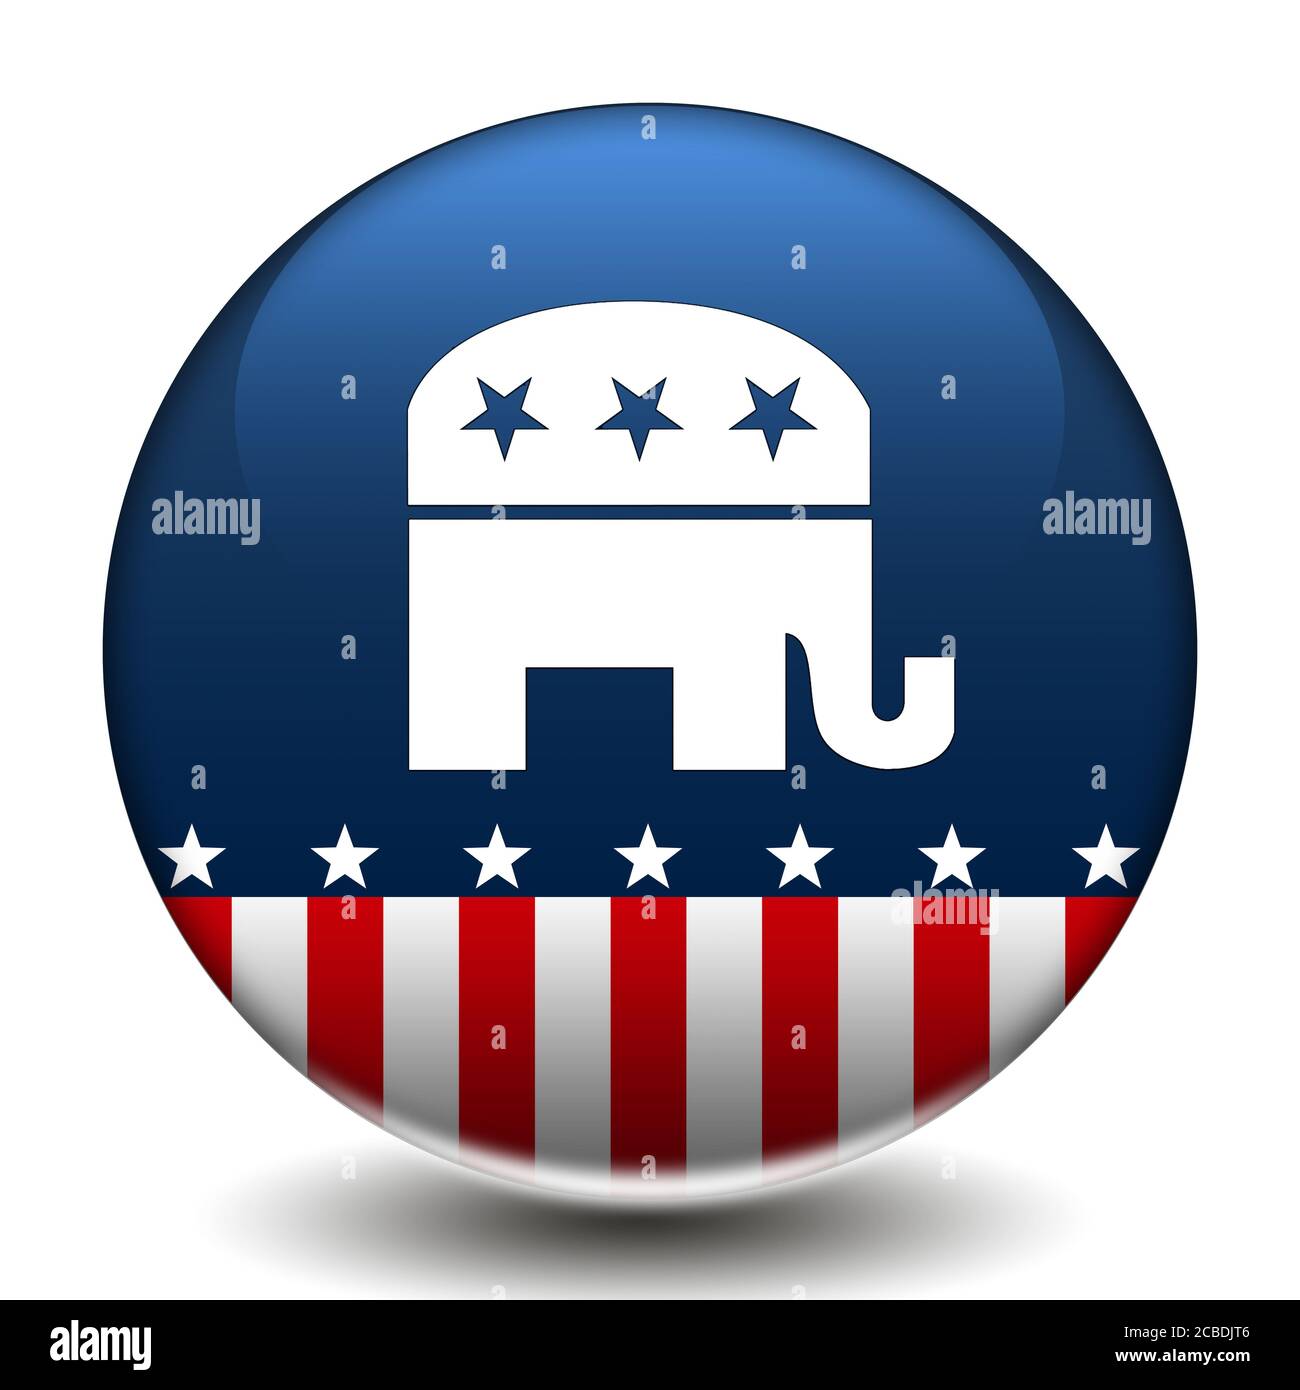 American Democratic Party icon button democrats logo Stock Photo